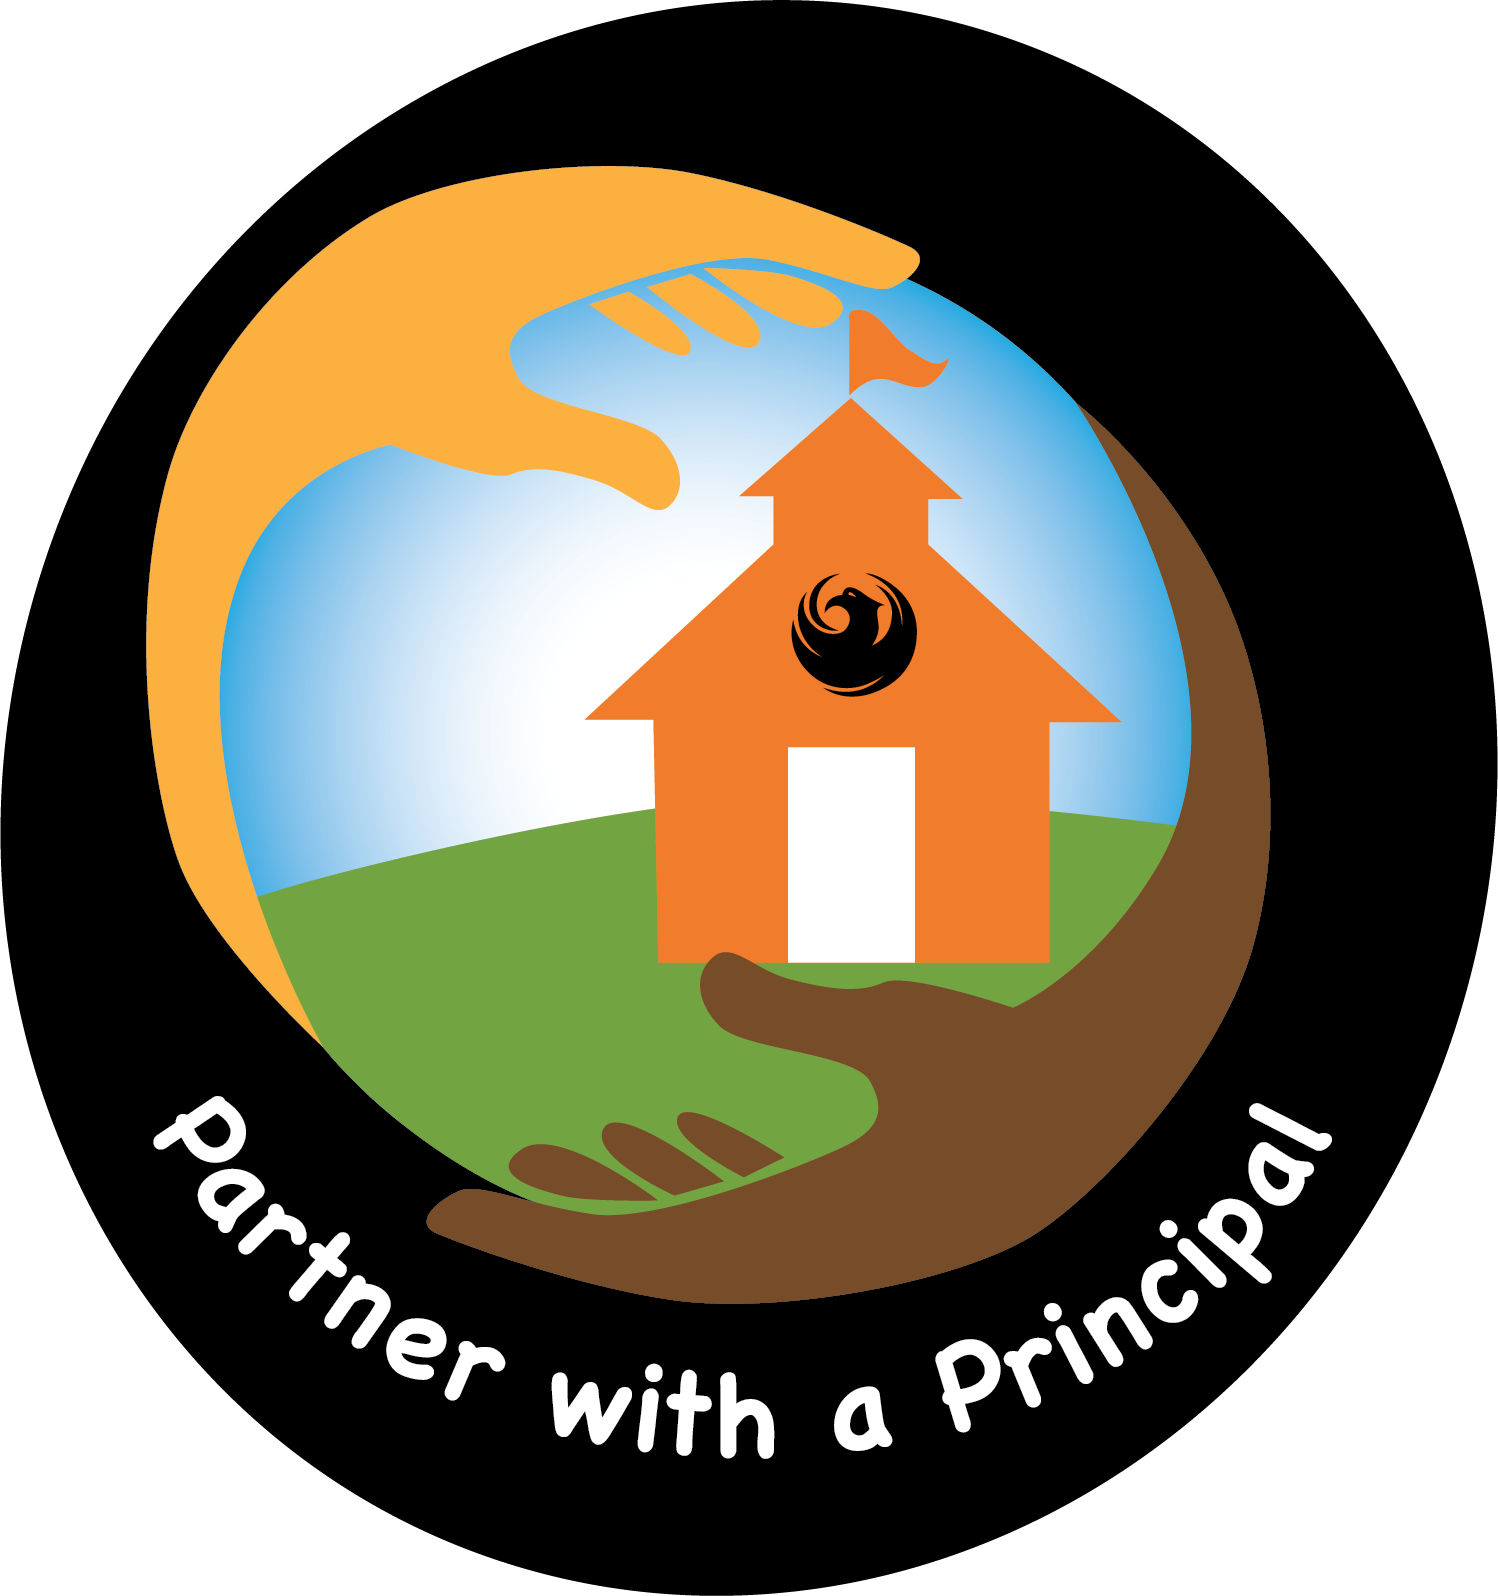 P85252 - final-Partner with a principle logo.png